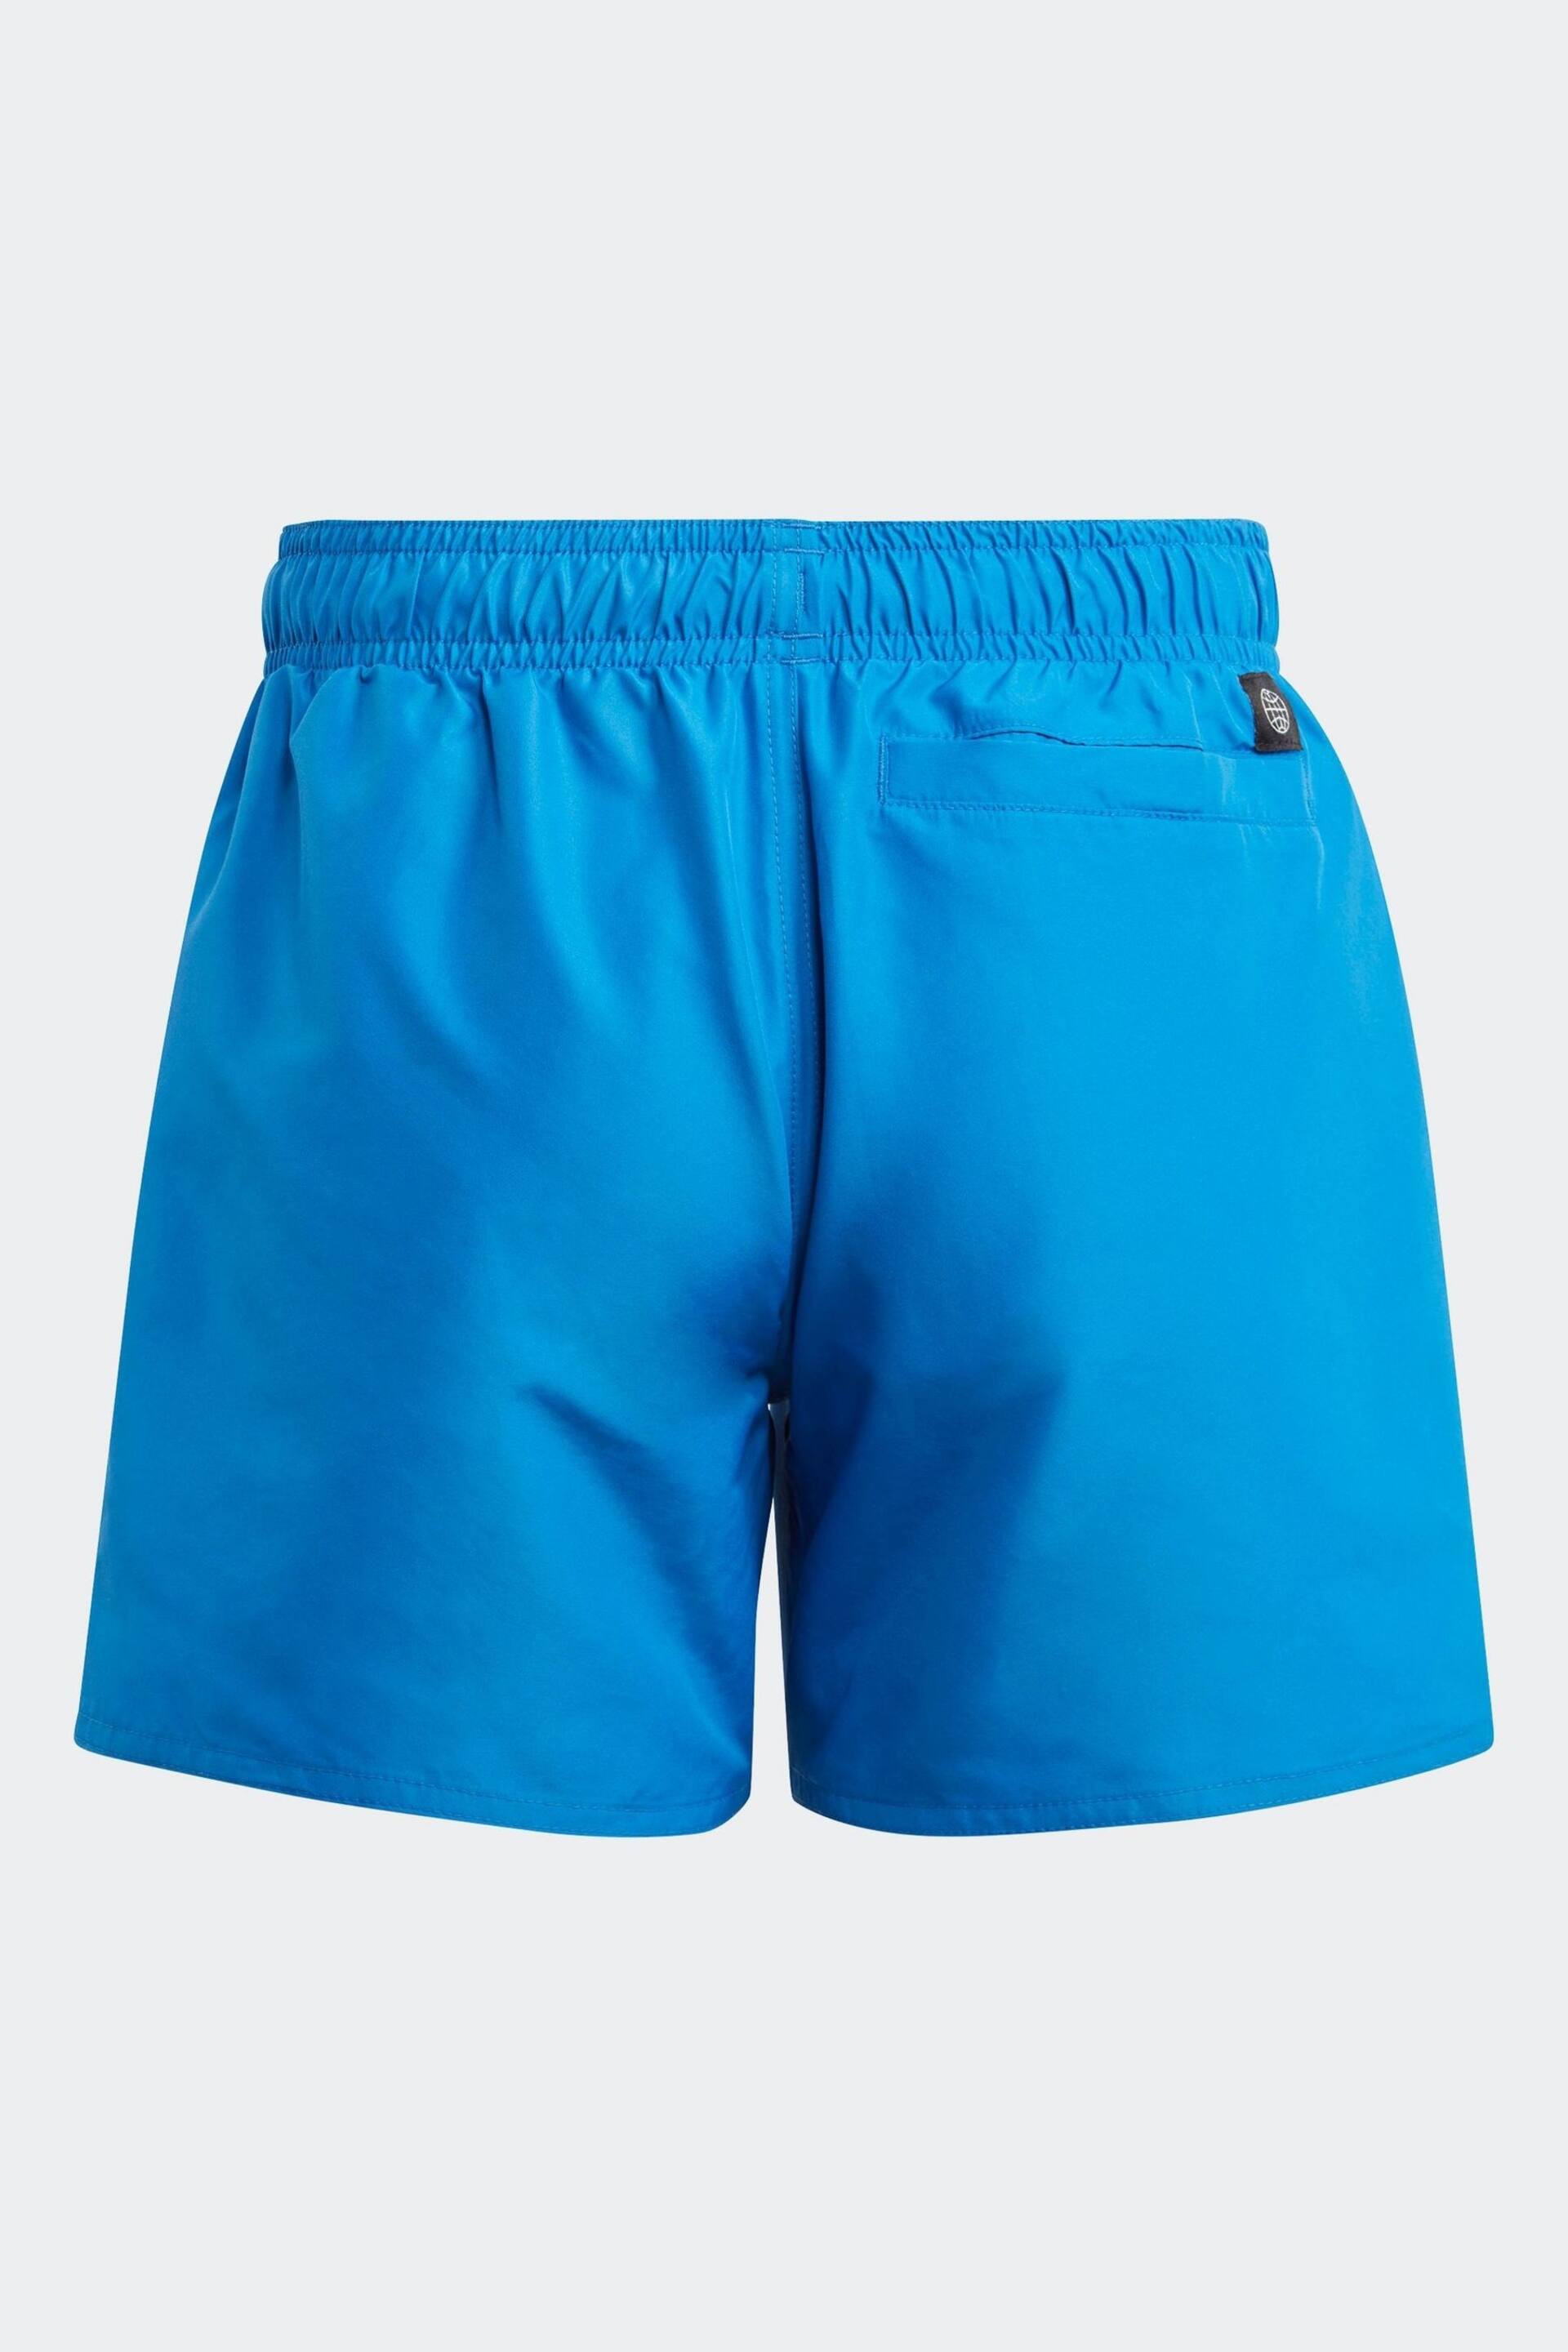 adidas Bright Blue Classic Badge Of Sport Swim Shorts - Image 2 of 5